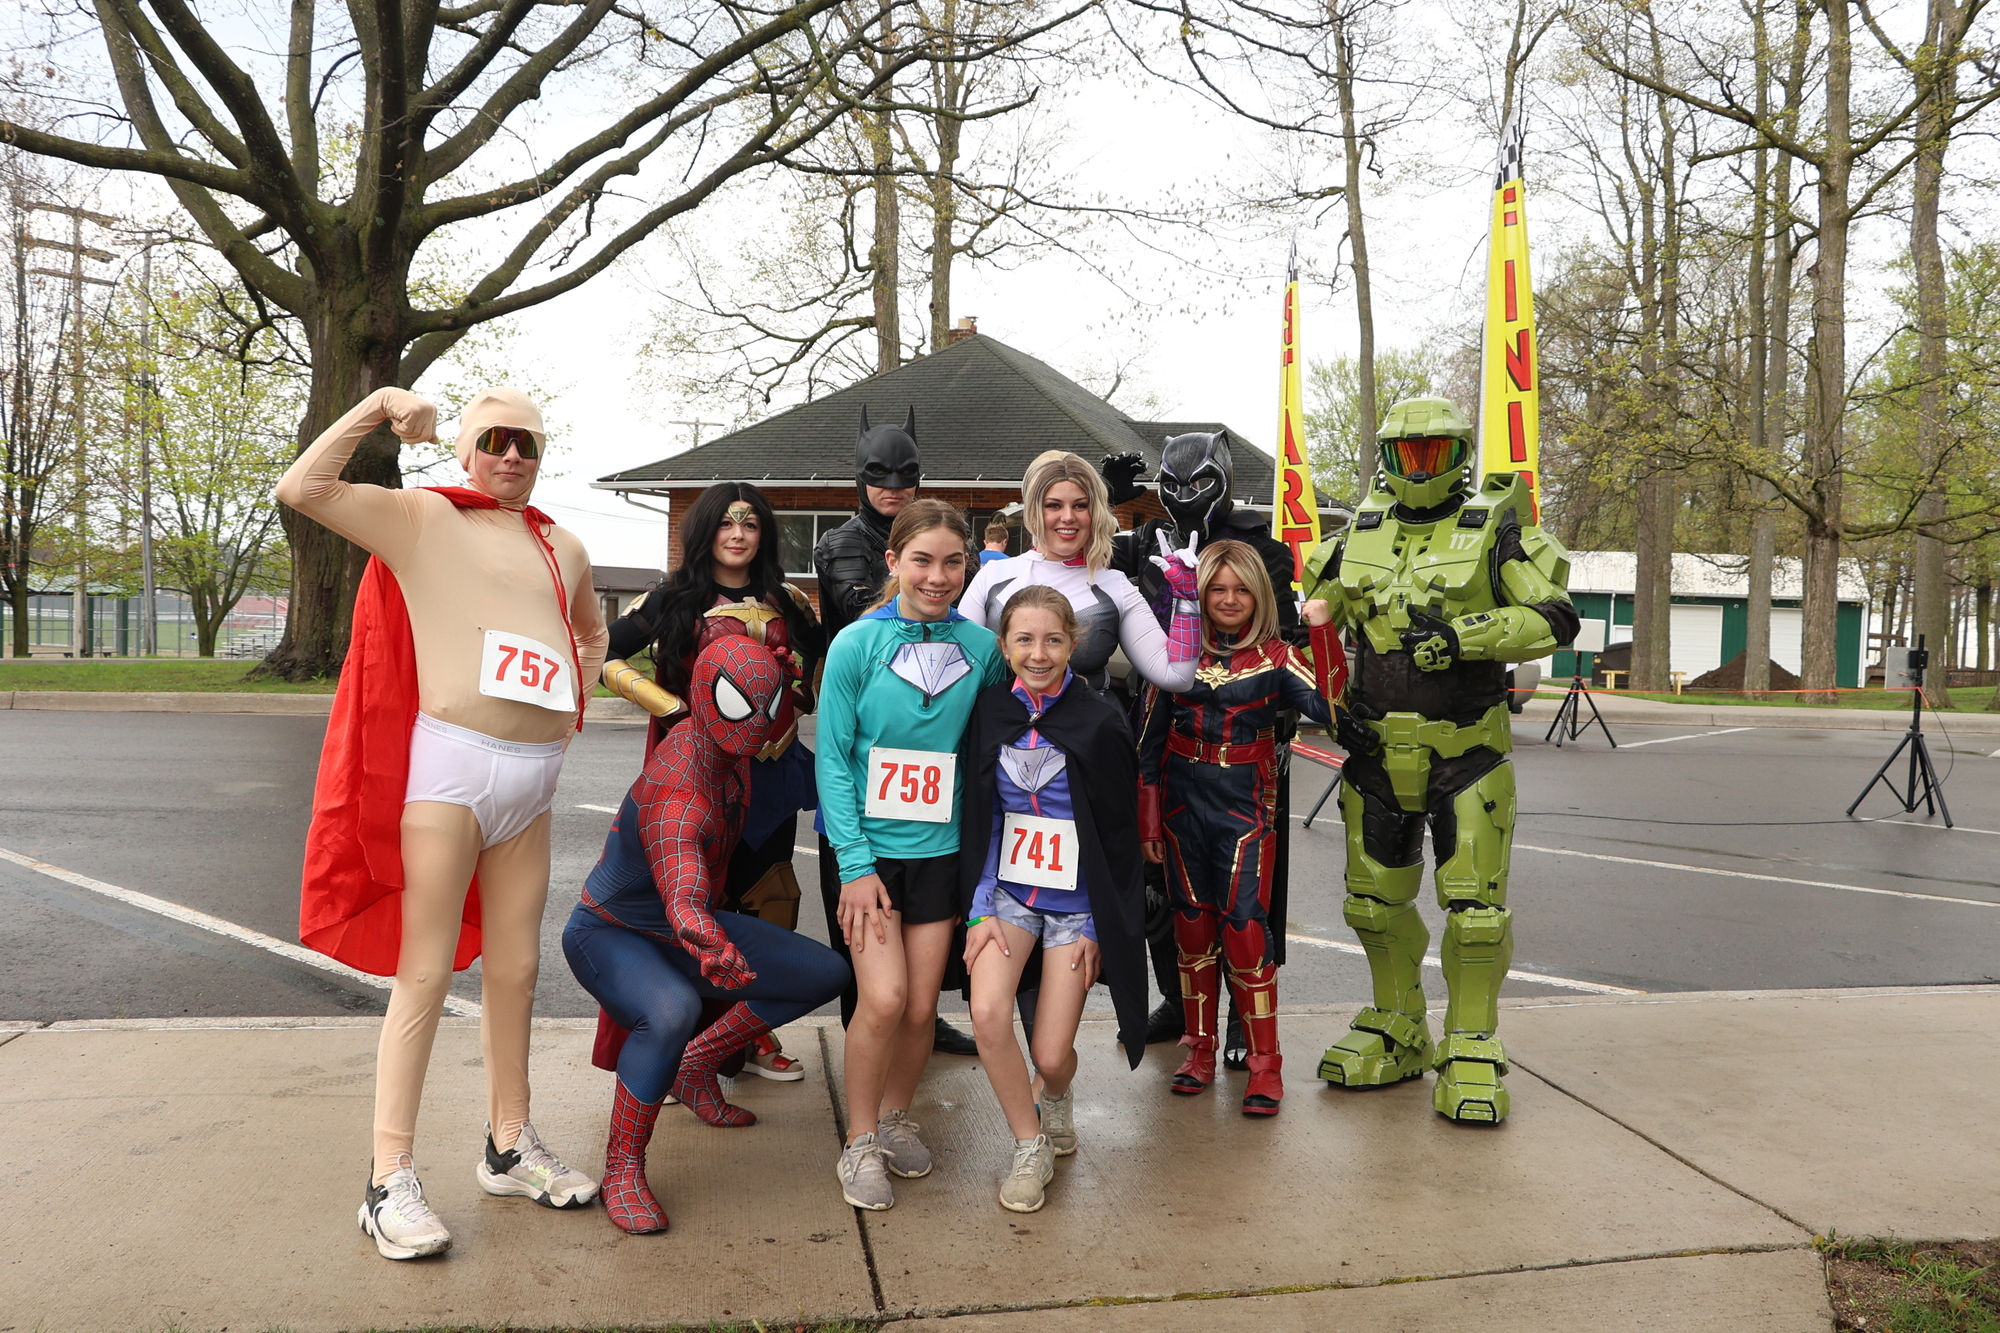 a group of racer dressed up like super heros